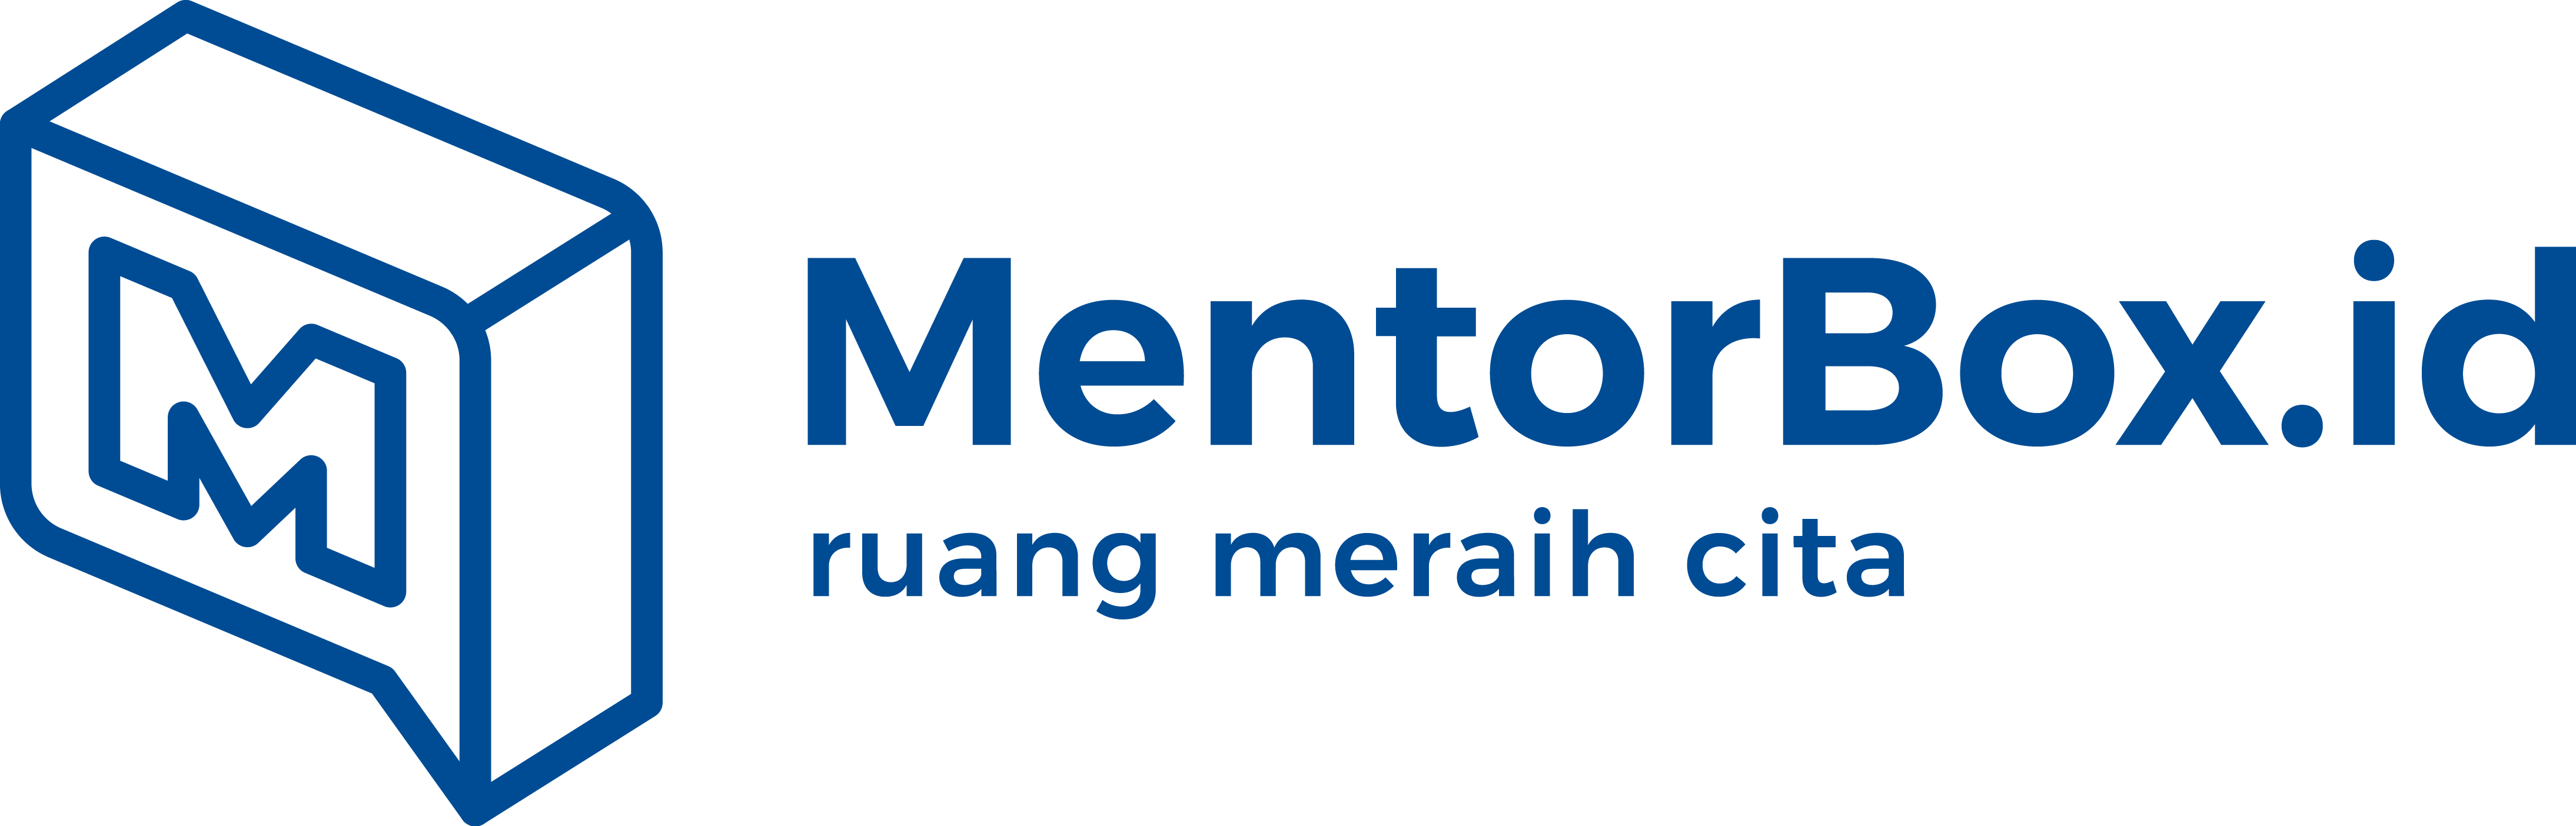 Mentorbox.id